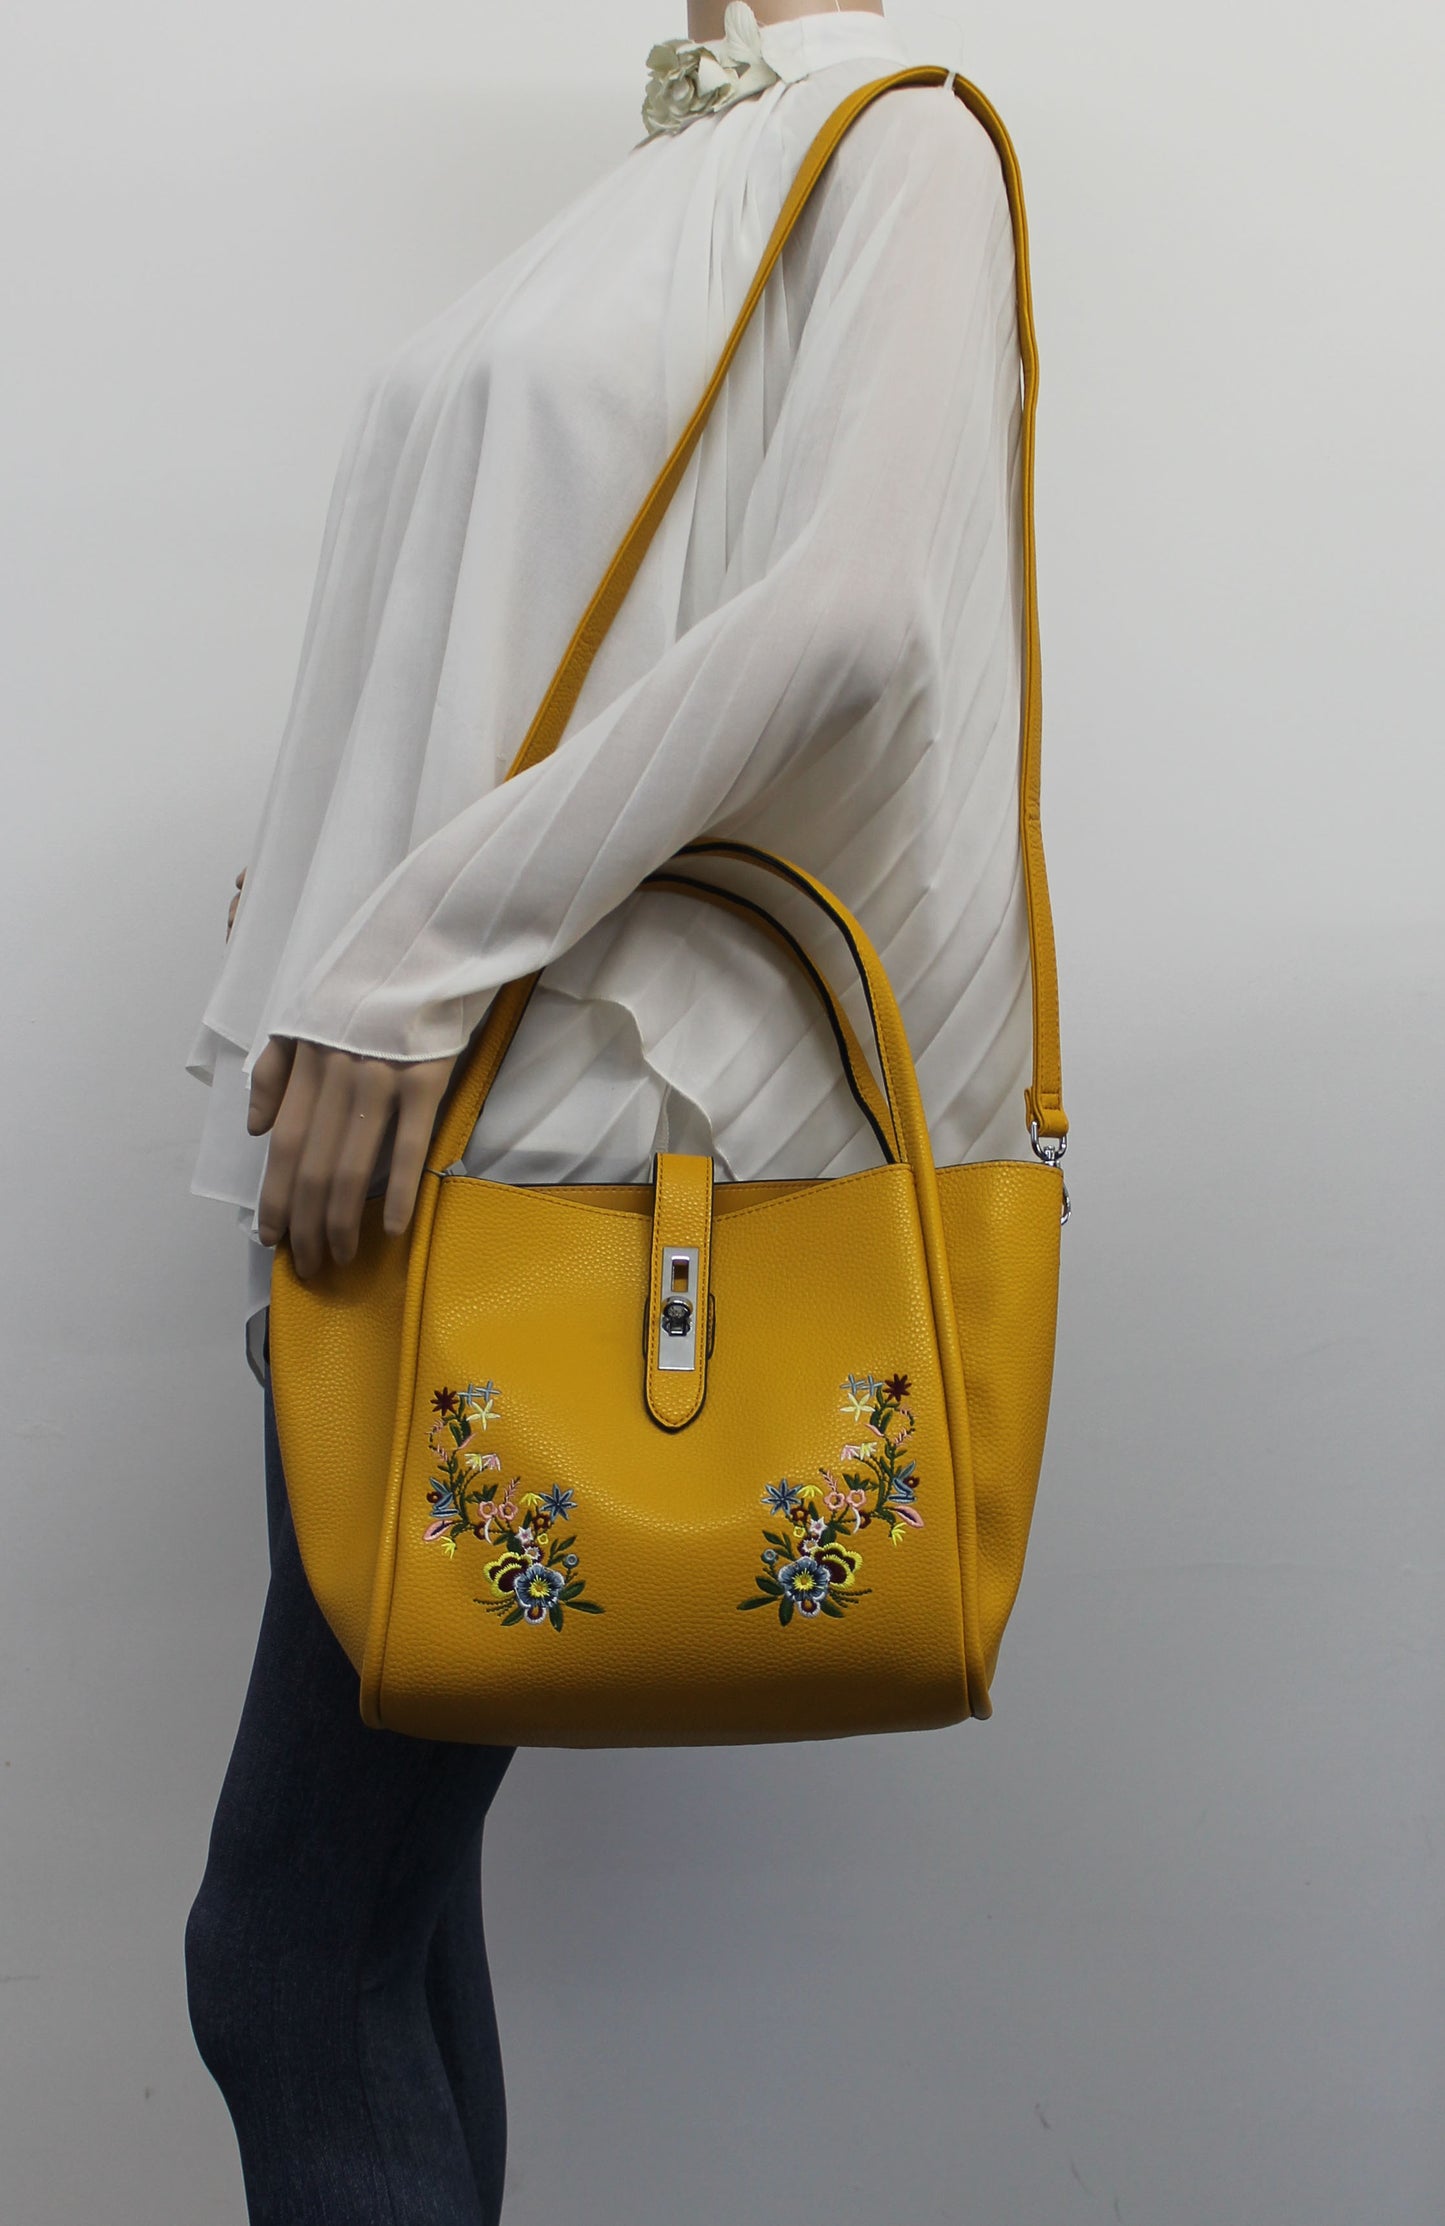 Rosie Summer Tote Handbag Primrose YellowBeautiful Cute Animal Faux Leather Clutch Bag Handles Strap Summer School